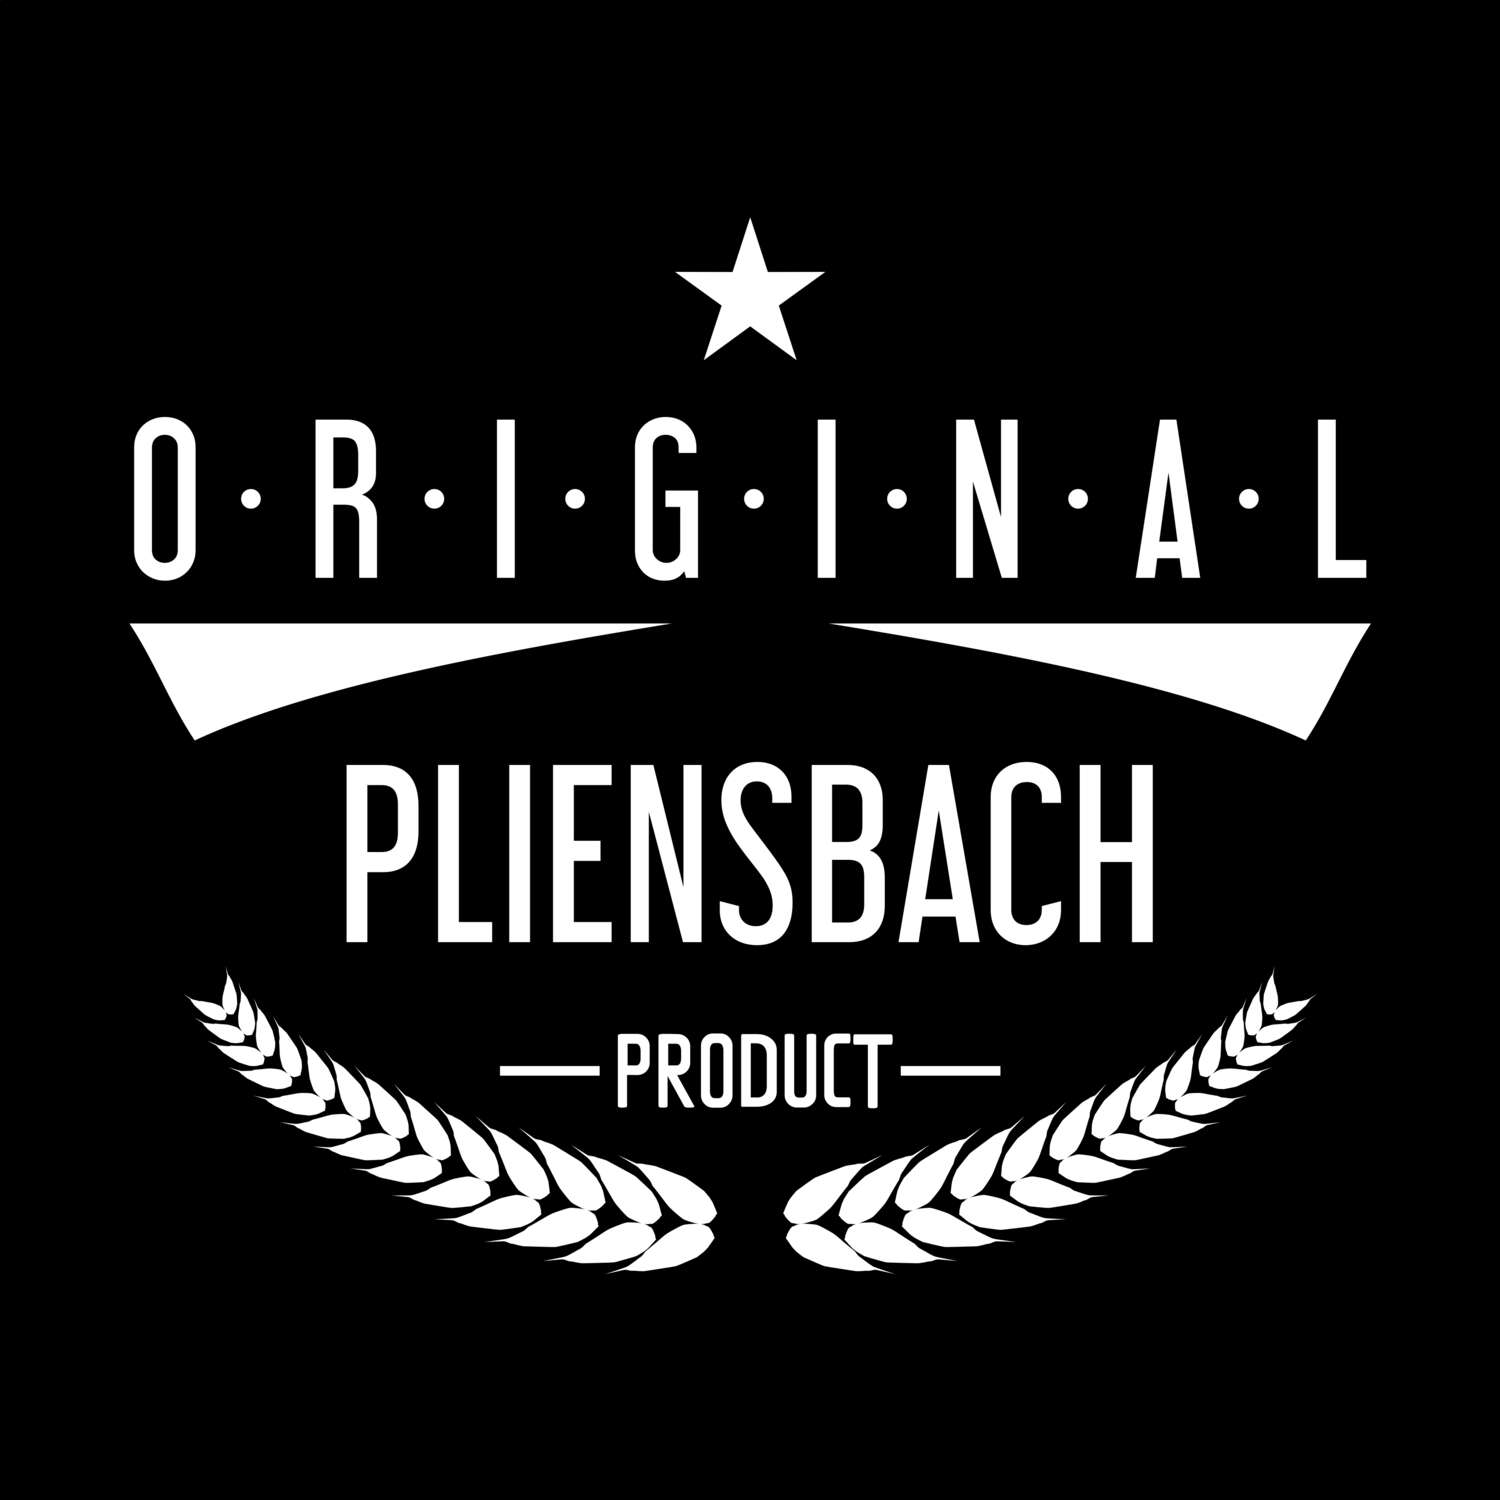 Pliensbach T-Shirt »Original Product«